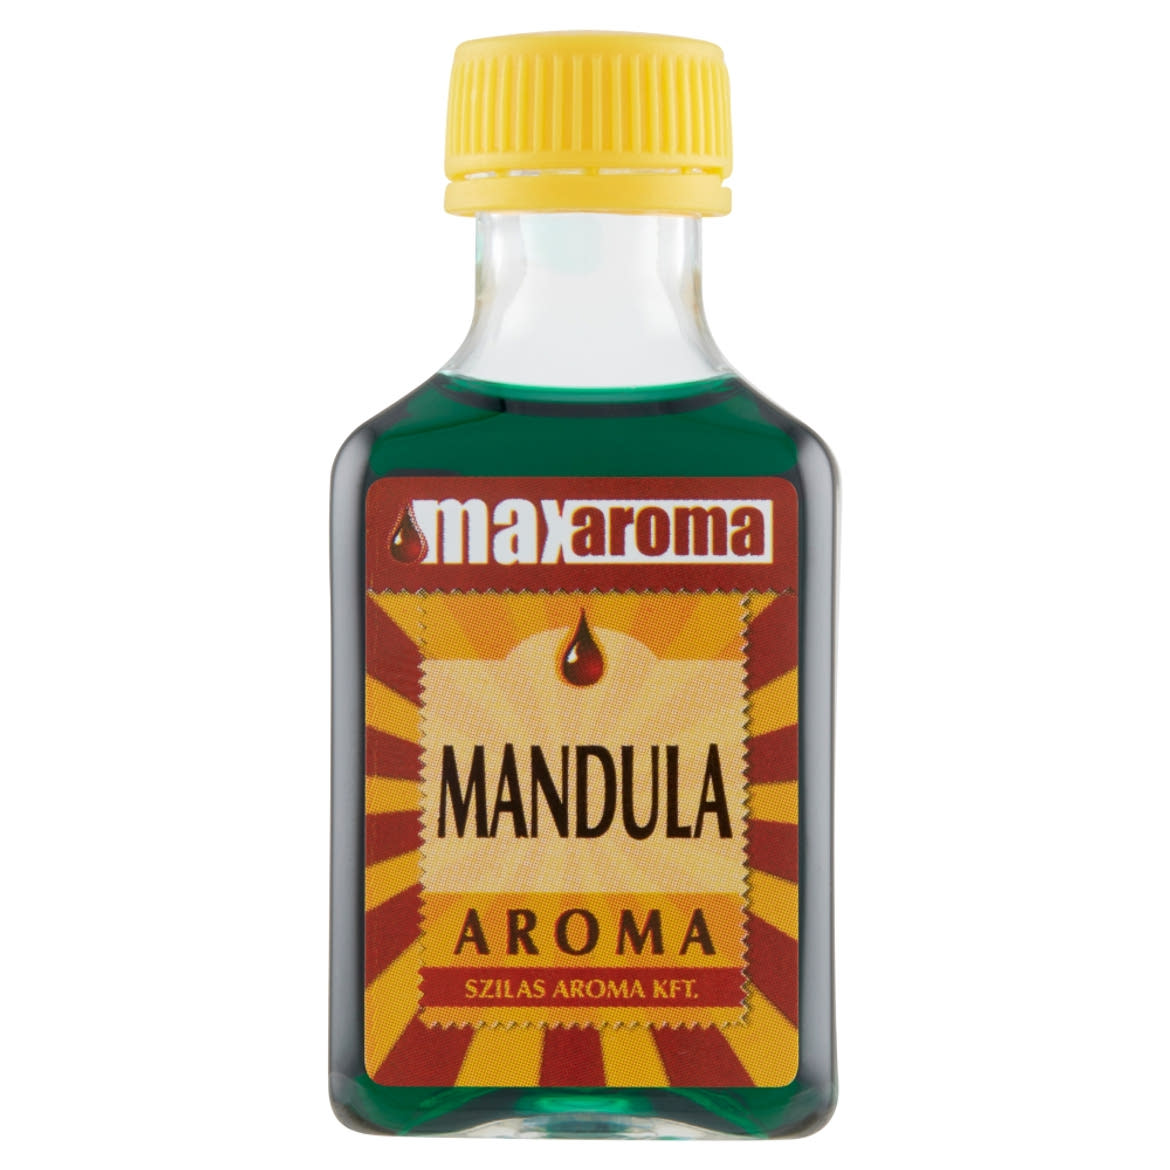 Max Aroma mandula aroma